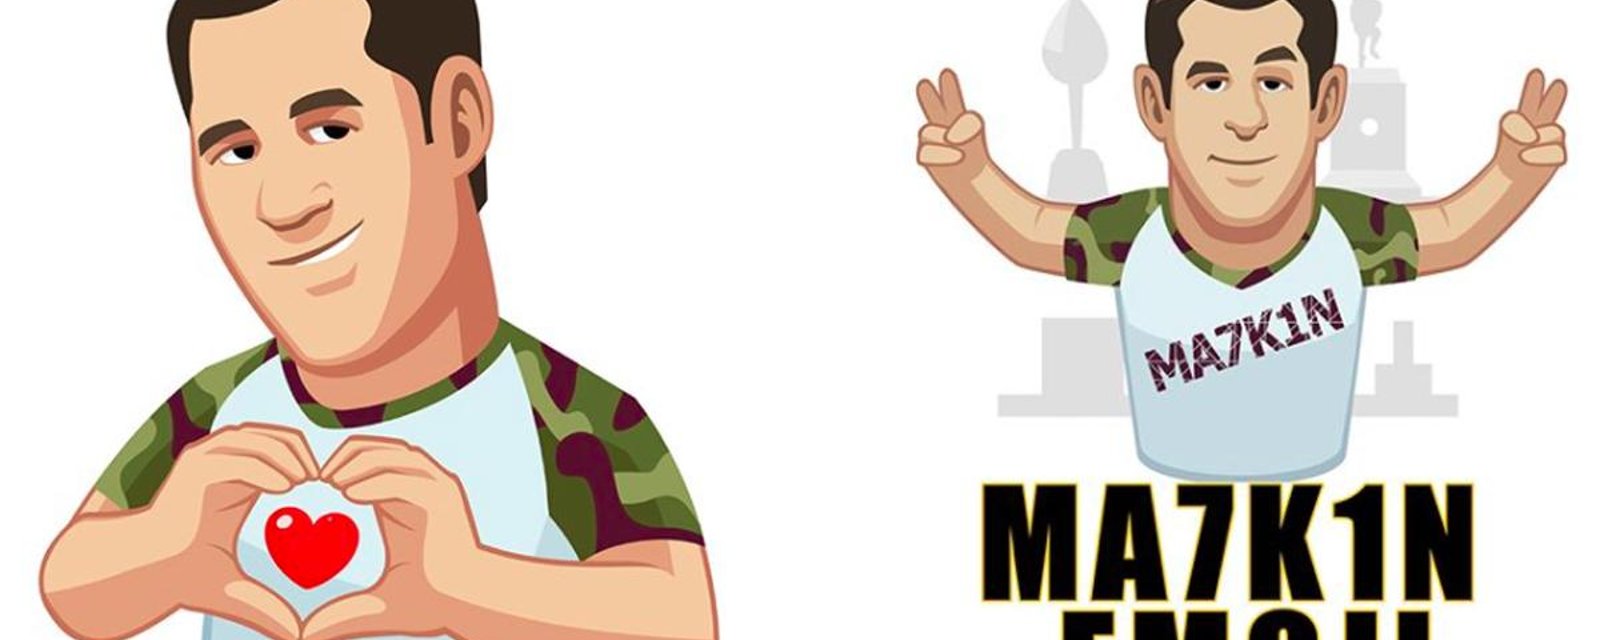 Malkin releases emoji app, special tribute to Fleury